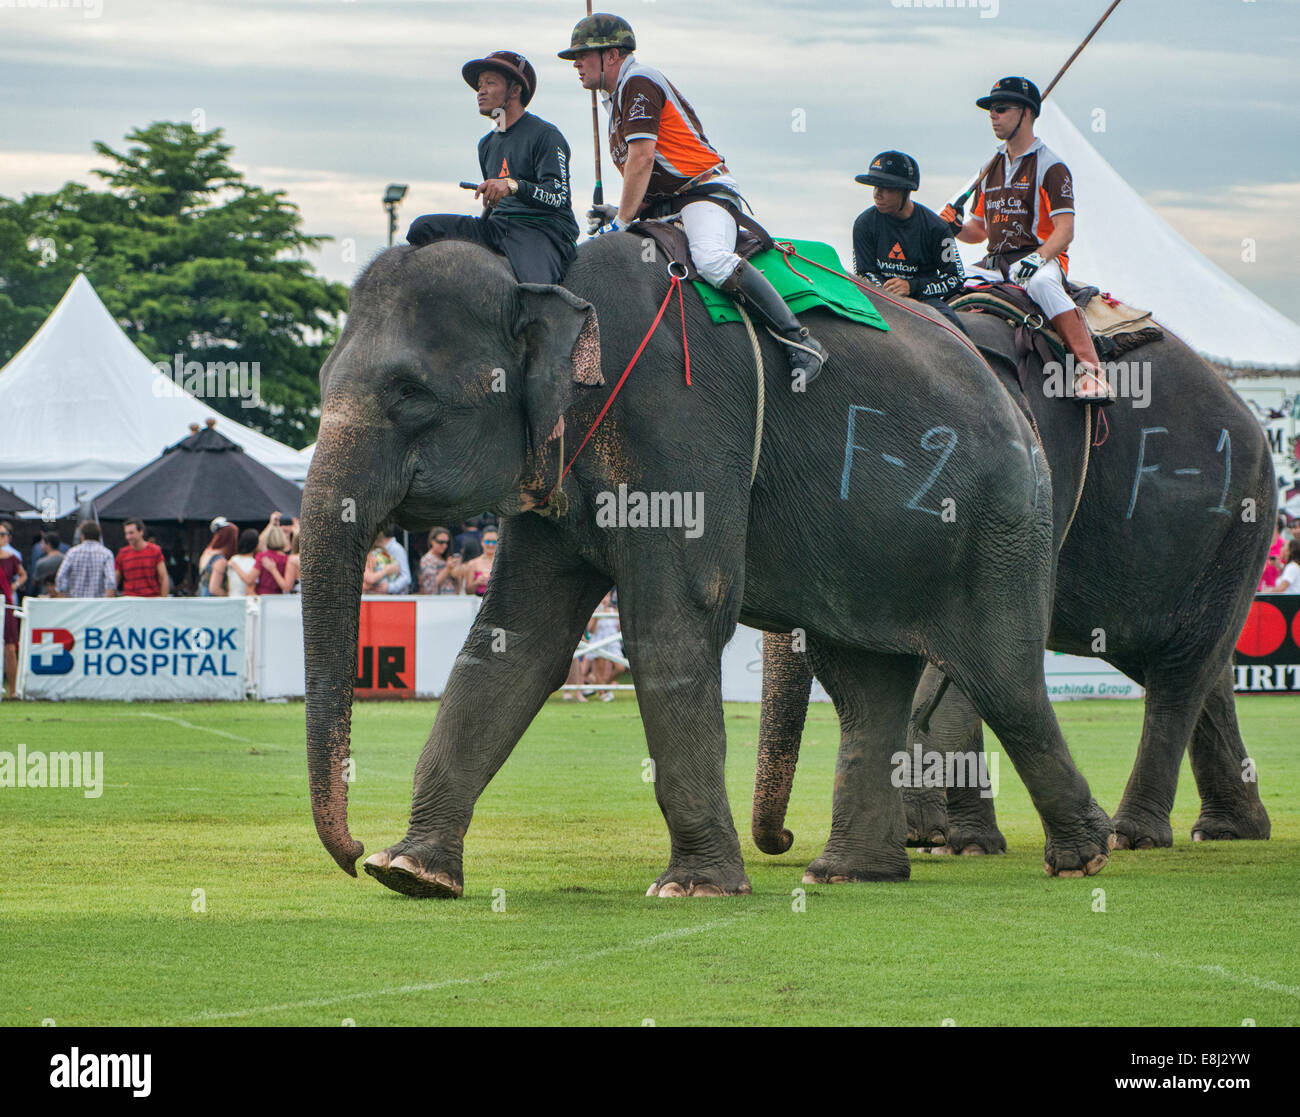 Elephant polo à la King's Cup tournoi de Polo à Bangkok, Thaïlande Photo  Stock - Alamy